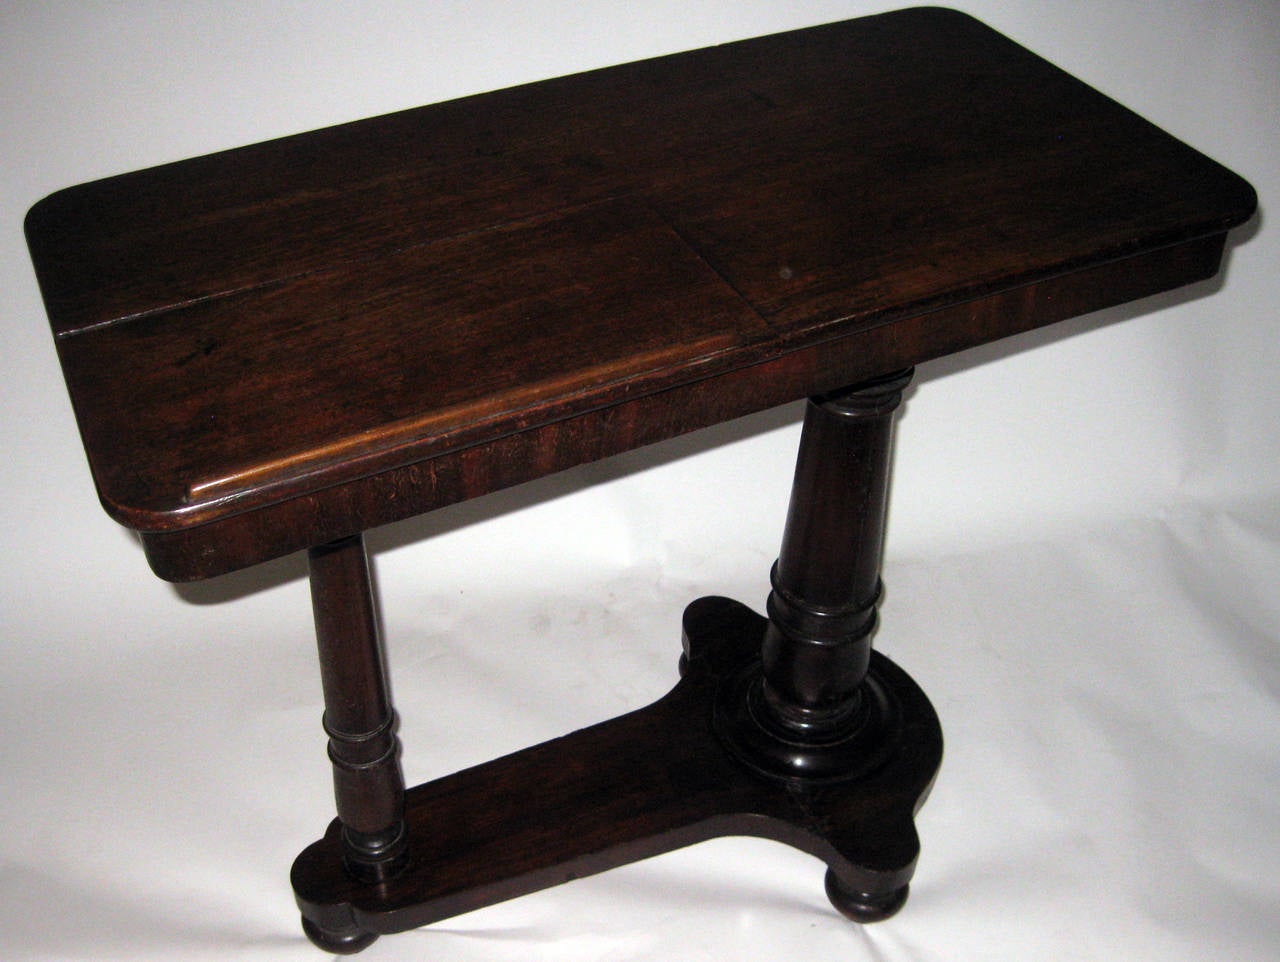 Great Britain (UK) 19th Century English Regency Adjustable Reading Table